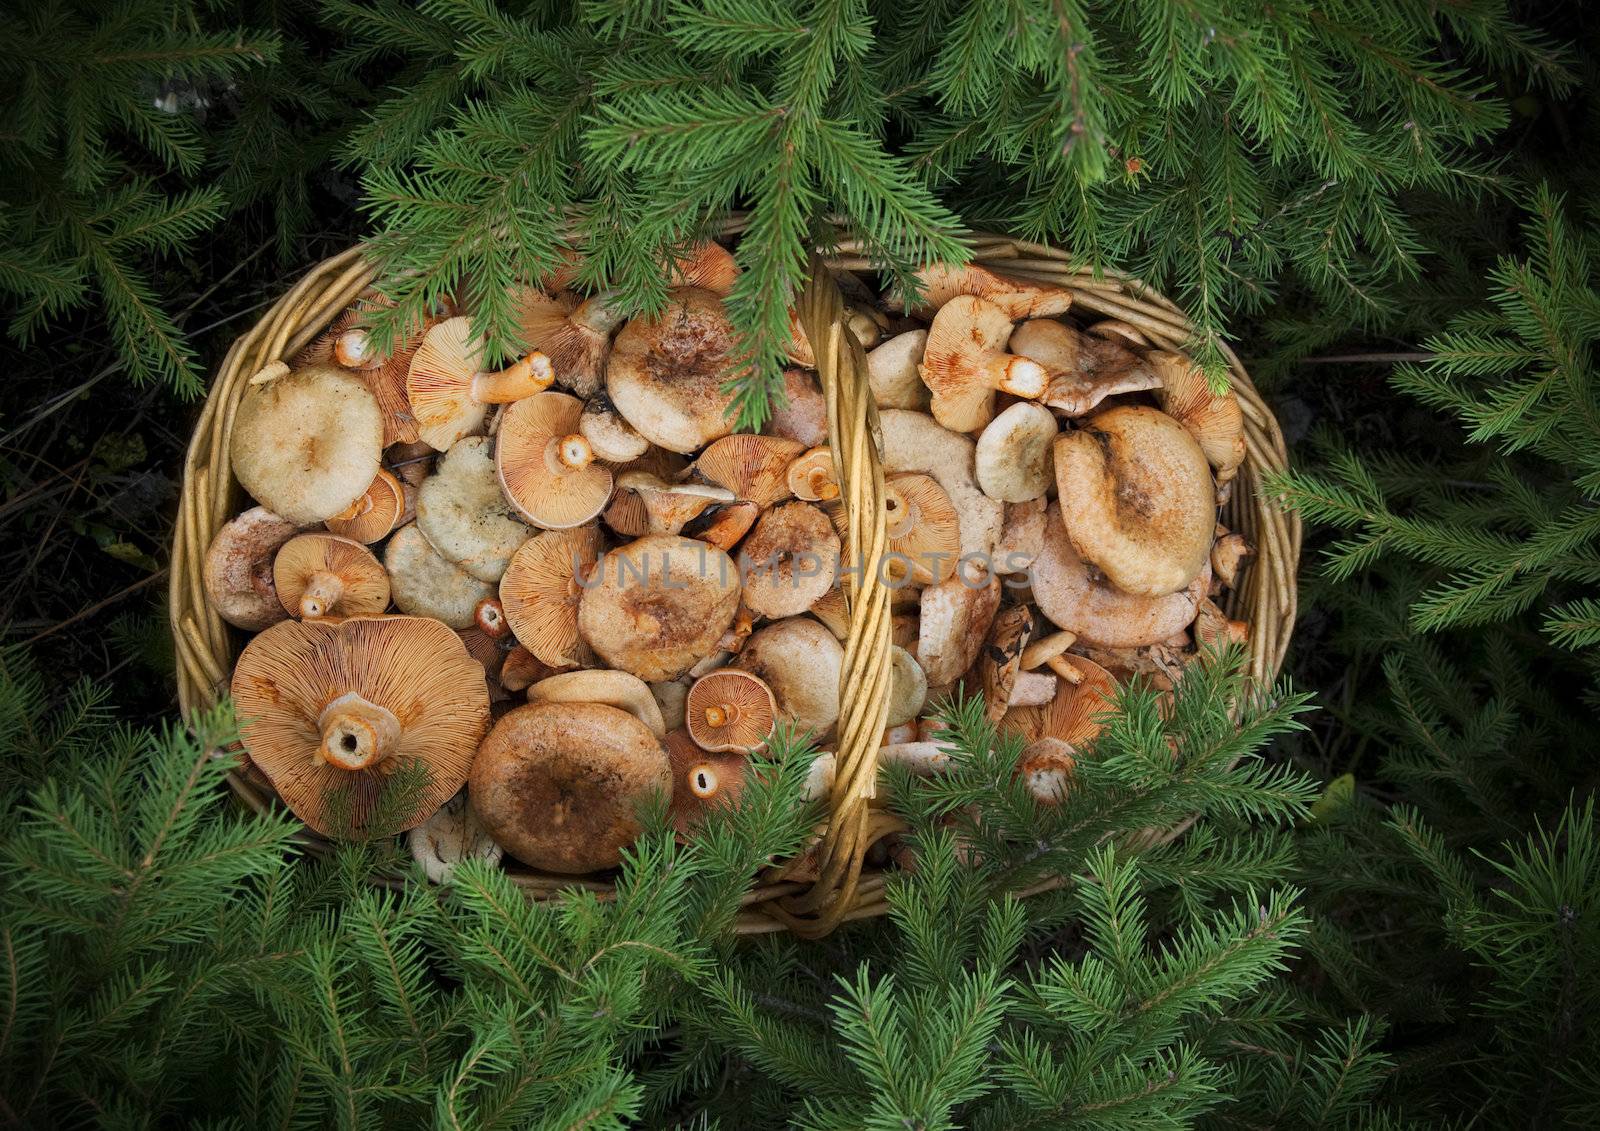 Mushroom in the basket by Axel80